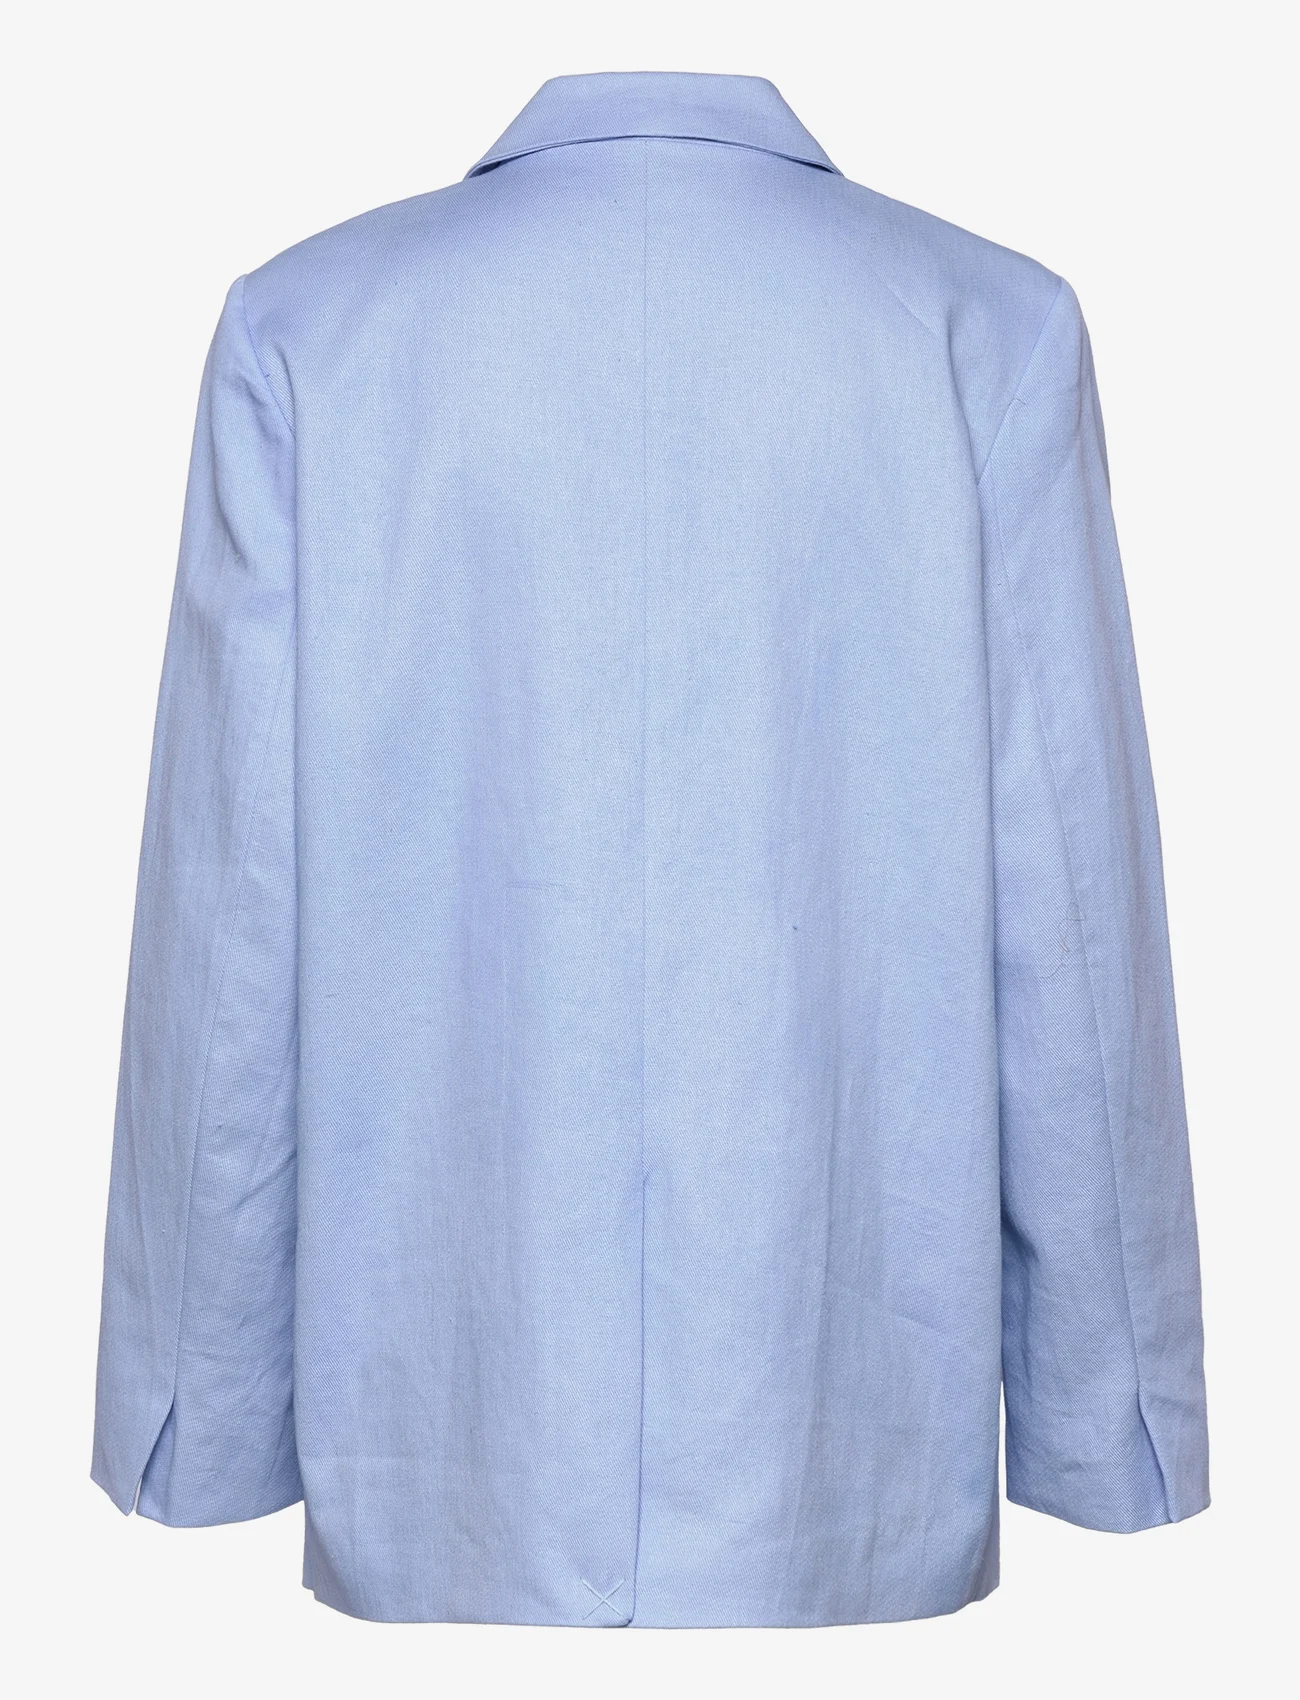 Modström - ParkMD blazer - feestelijke kleding voor outlet-prijzen - blue heron - 1